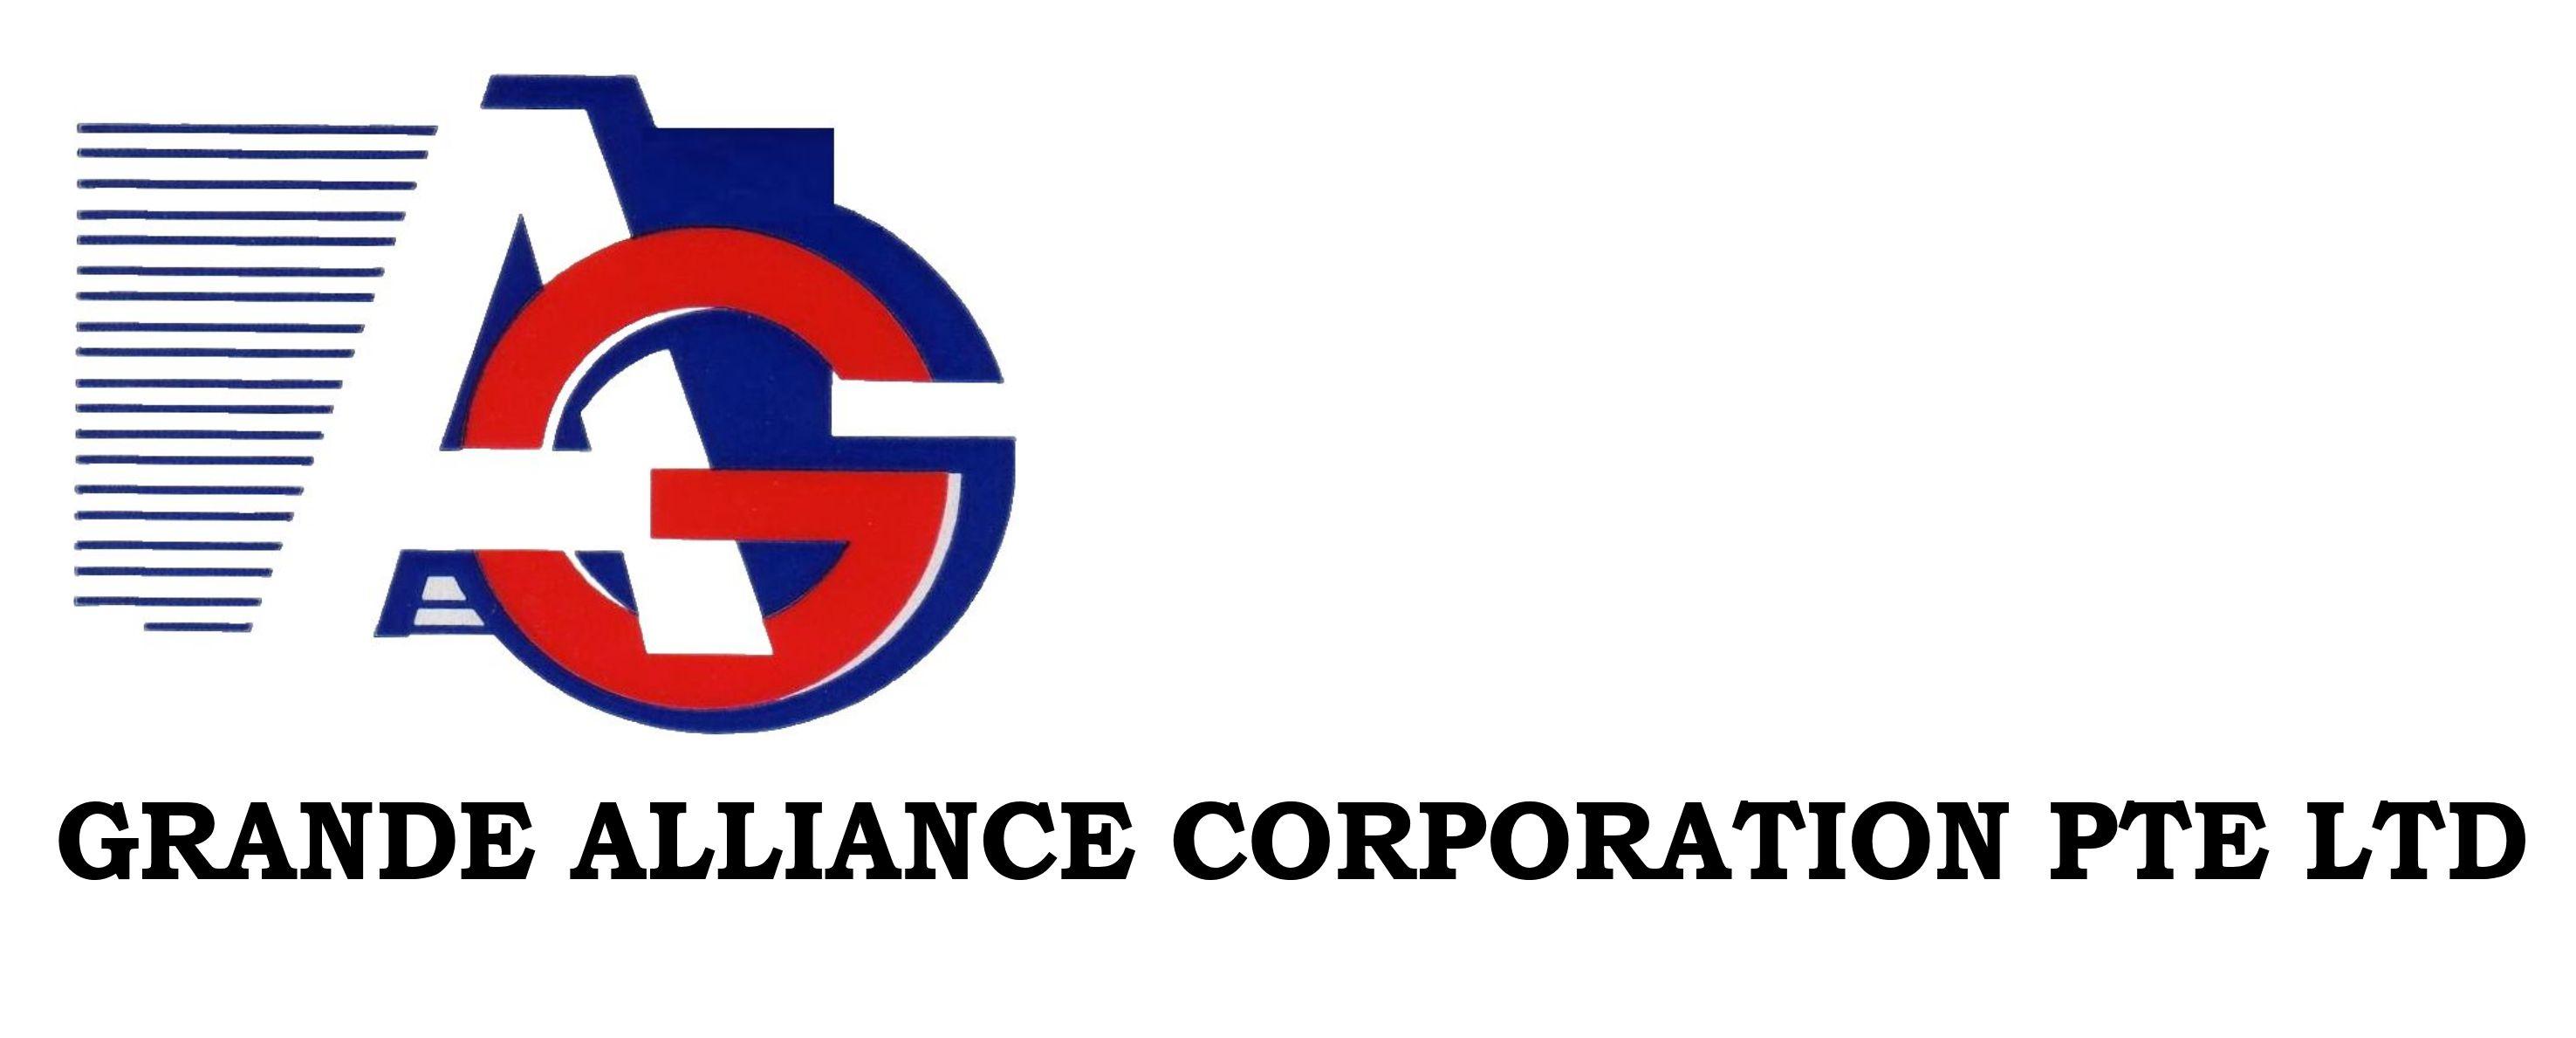 Grande Alliance Corpn Pte Ltd Logo